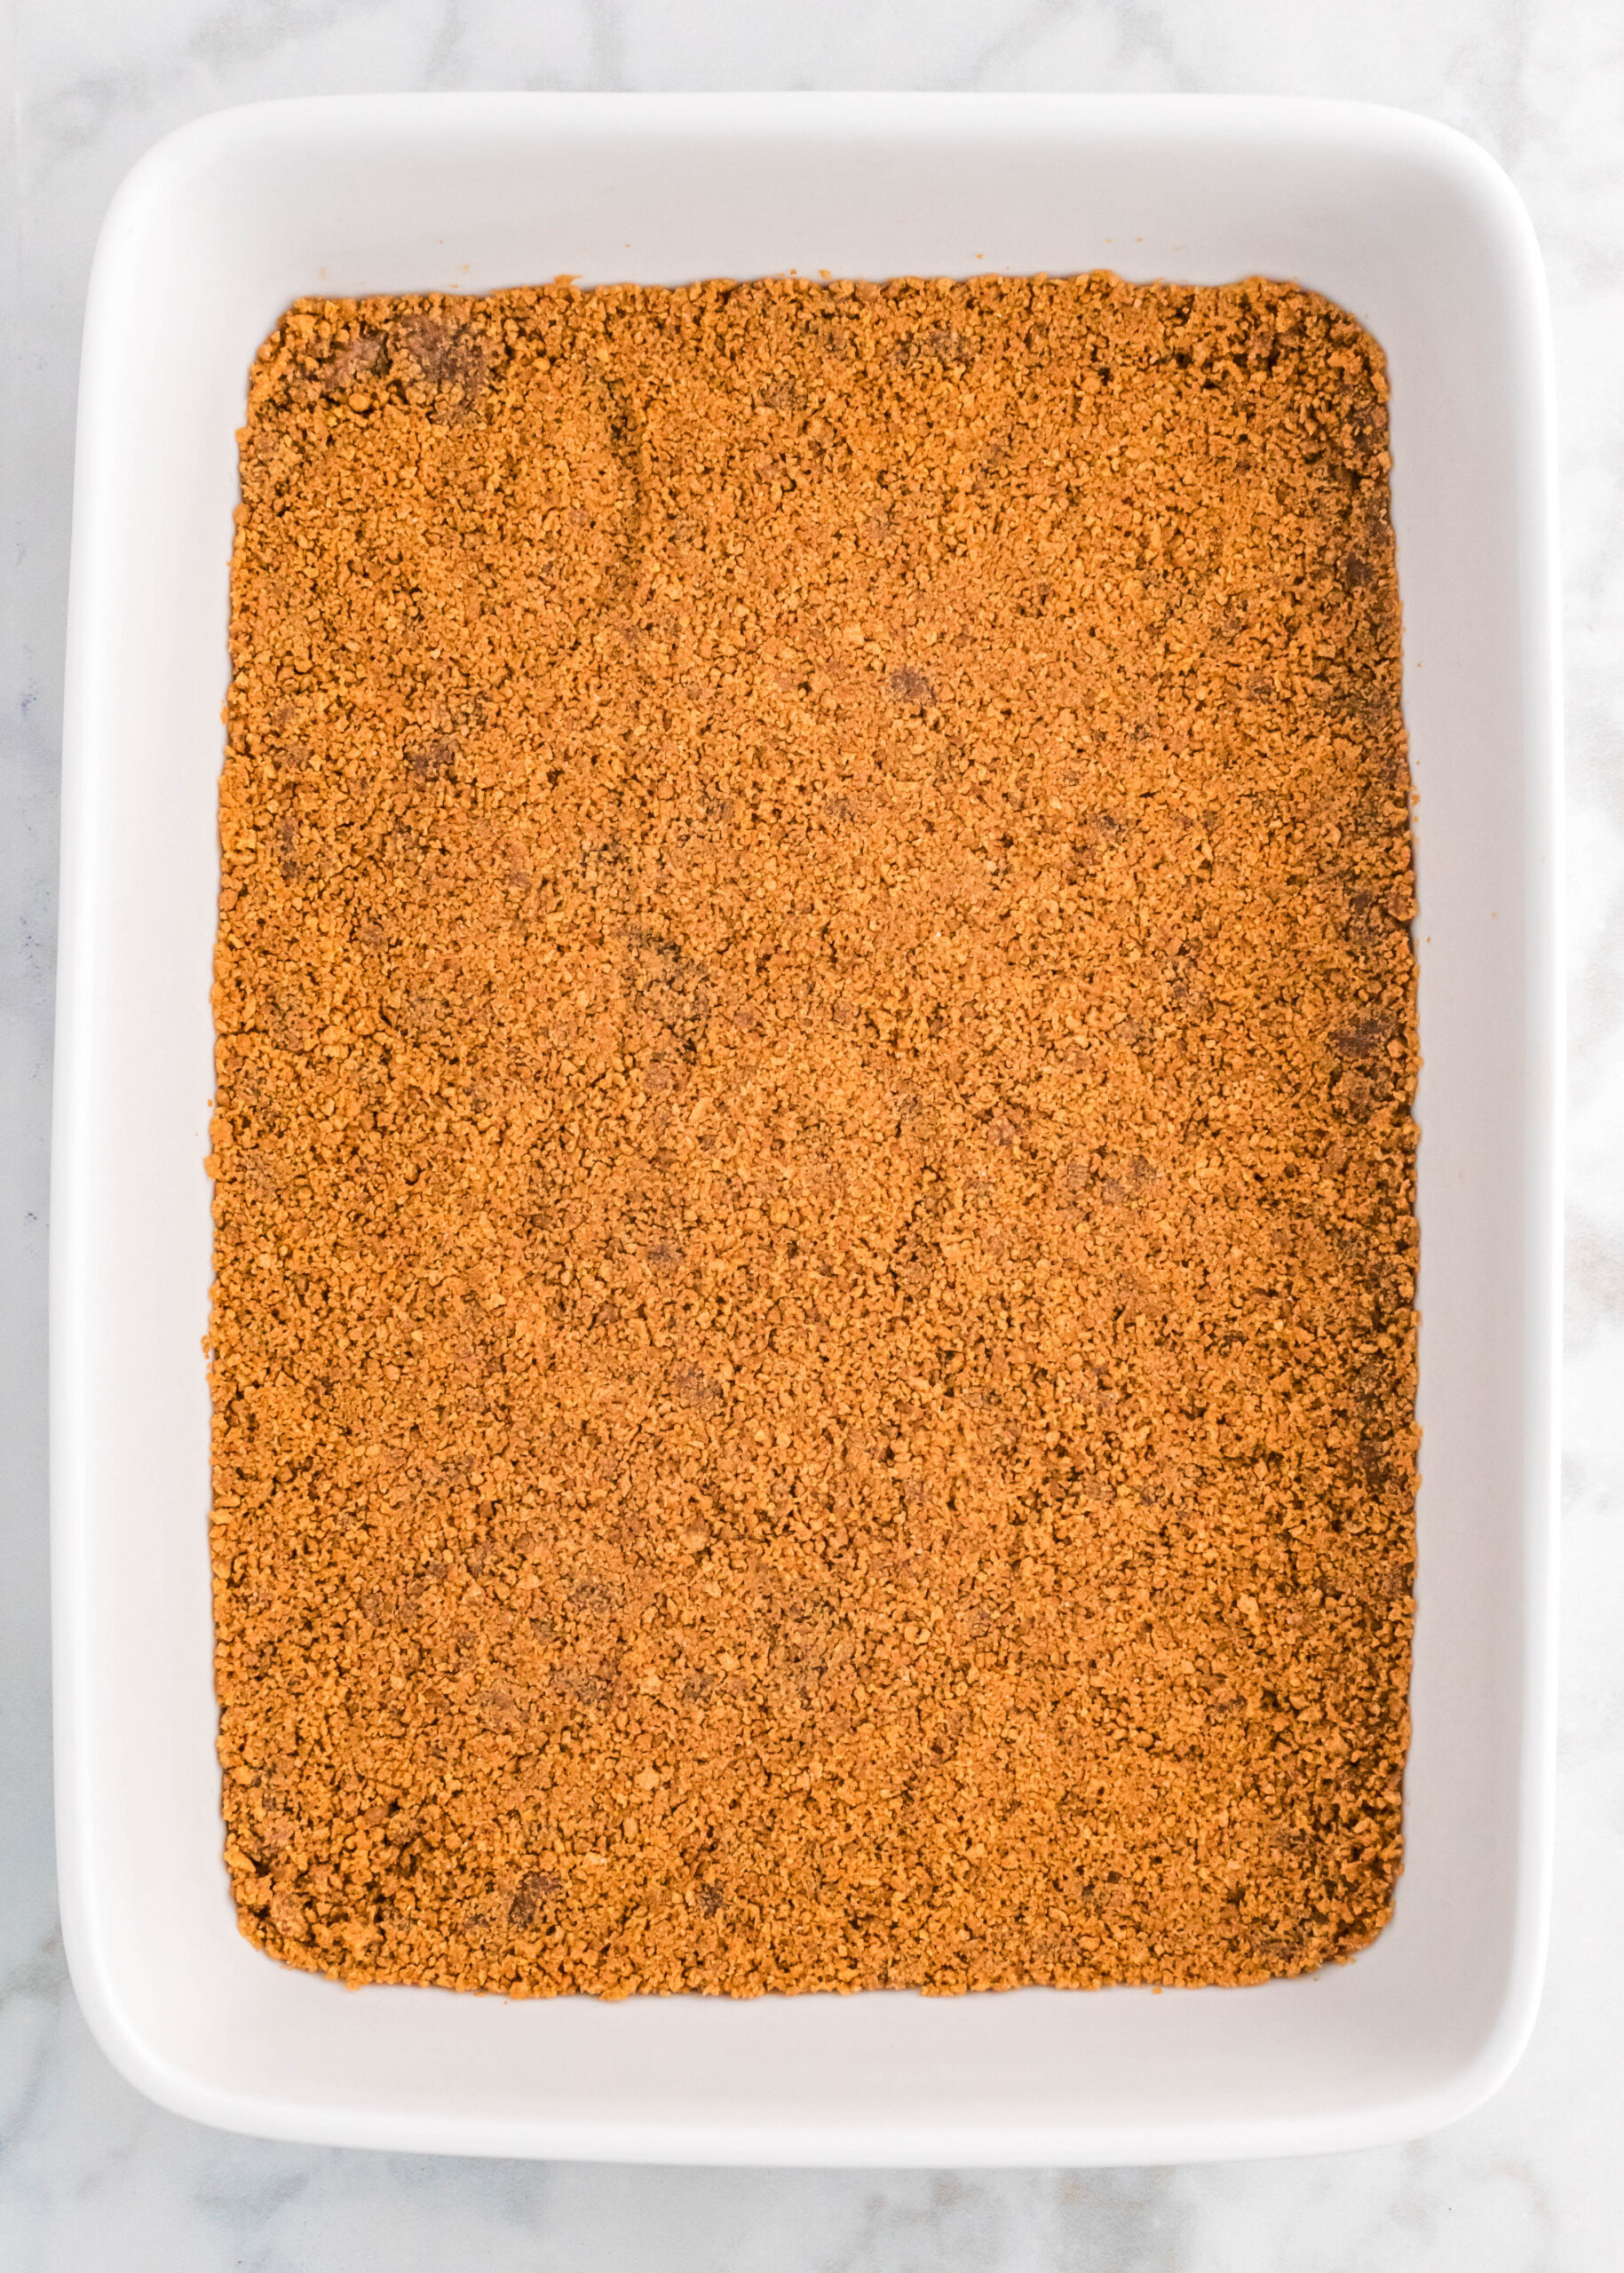 gingersnap crust in a baking pan